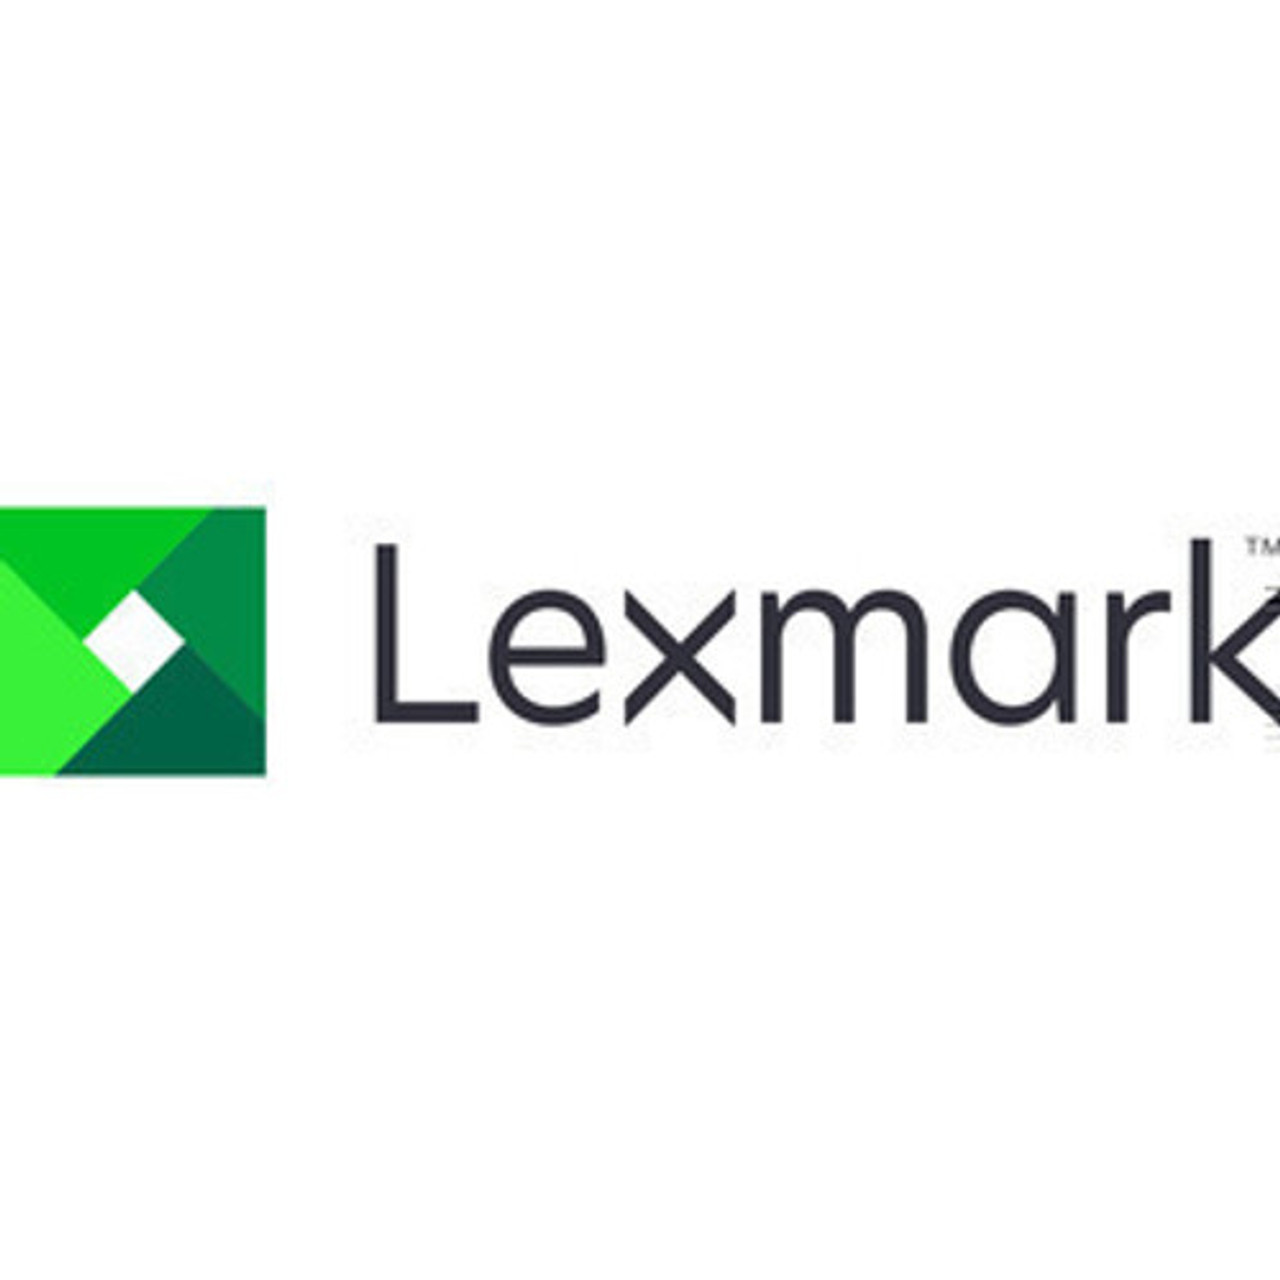 Lexmark 21Z0357 Finisher Staples For use in 4-Pack Estimated yield 20K - 21Z0357